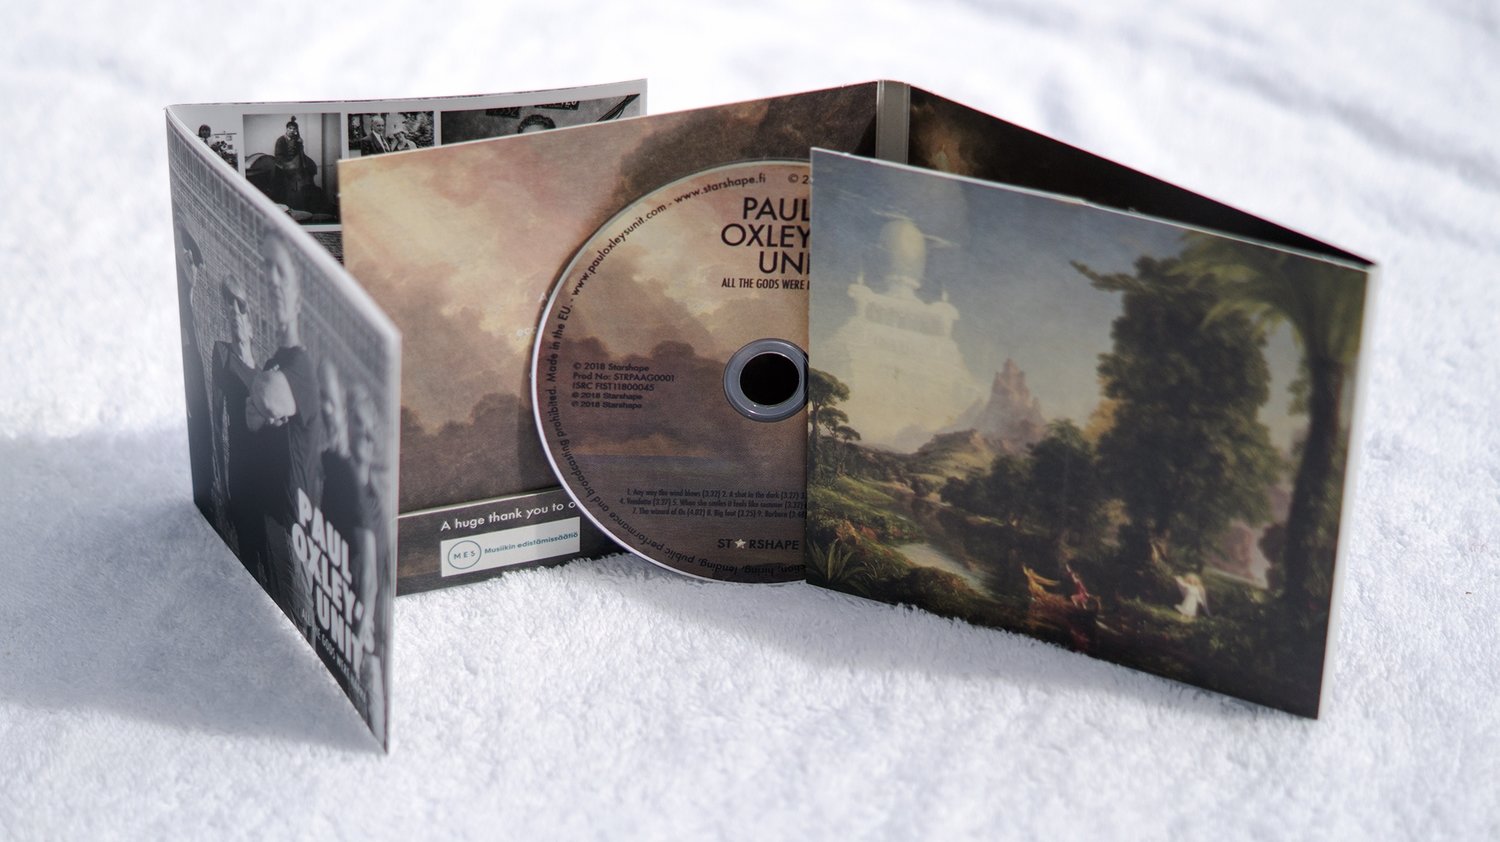 POU - 'All the gods were happy' CD album (Eco Carton CD with Booklet)